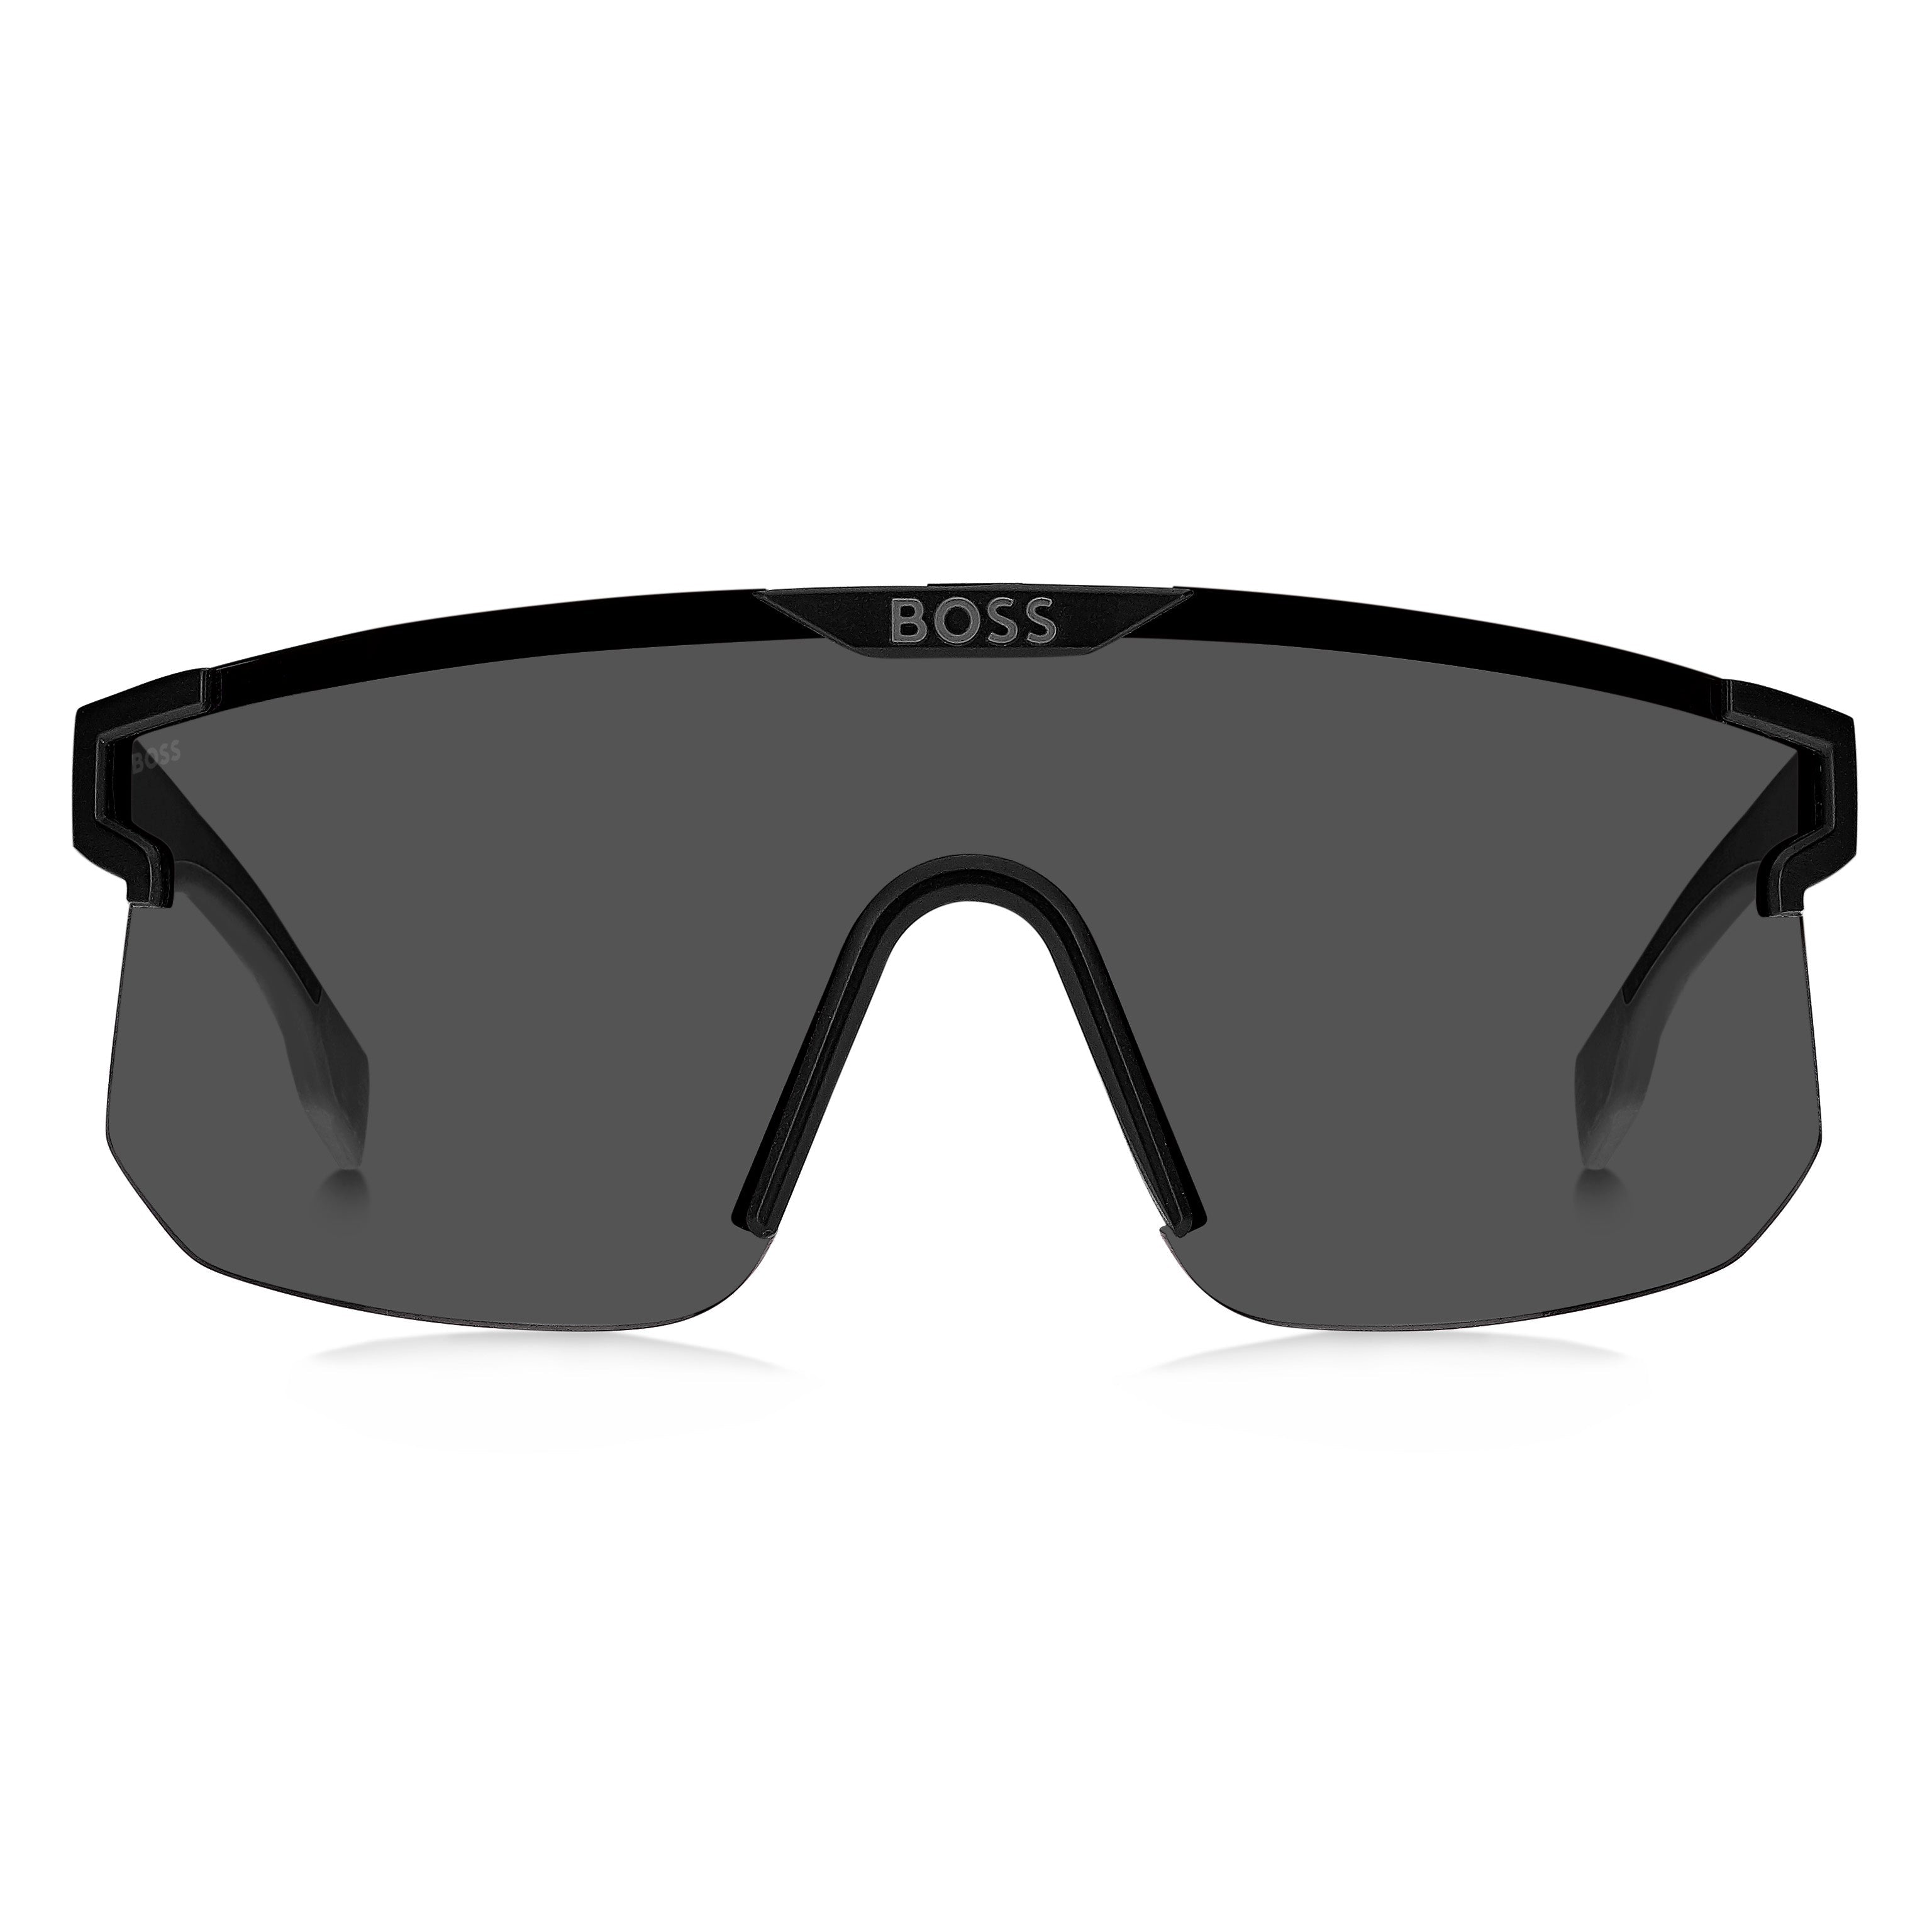 Hugo Boss Sunglasses BOSS 0761/S RHL IR Gold Black Gray | eBay